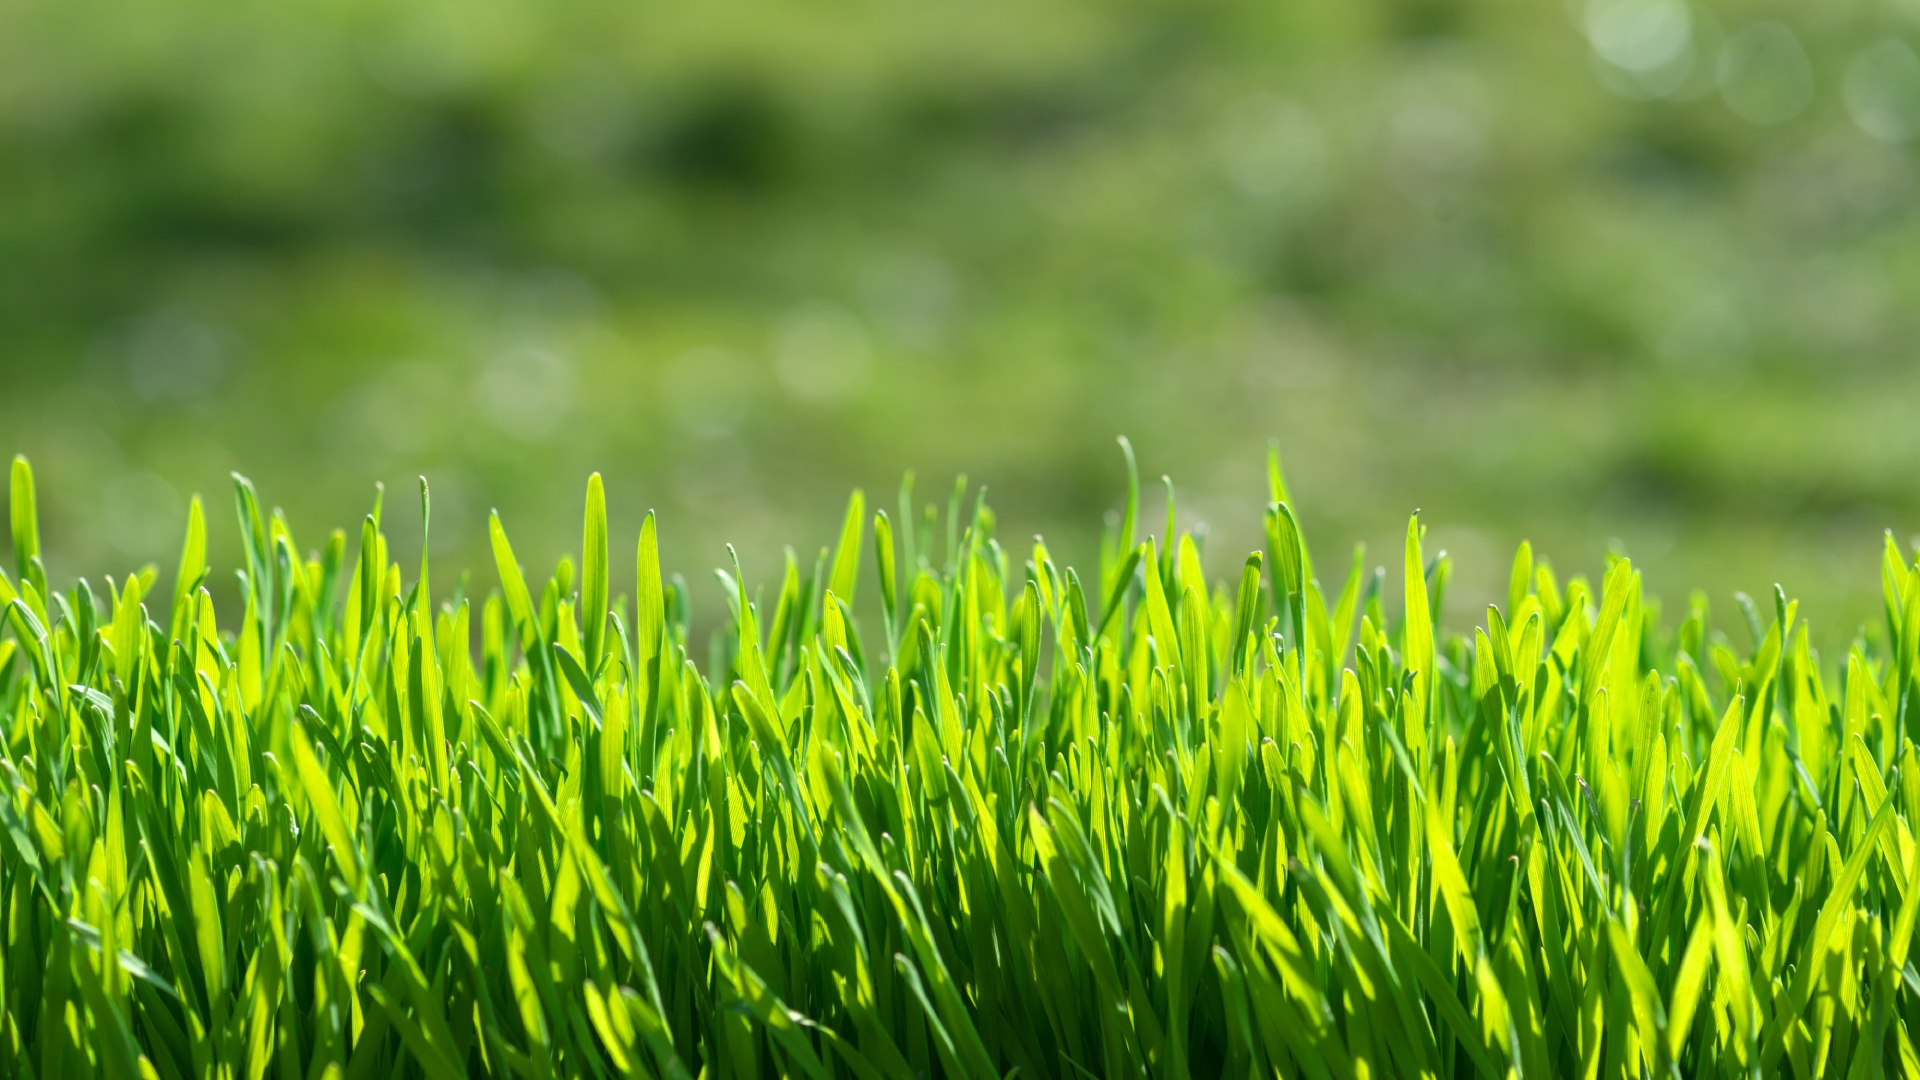 Green grass height shown in Harleysville, PA.